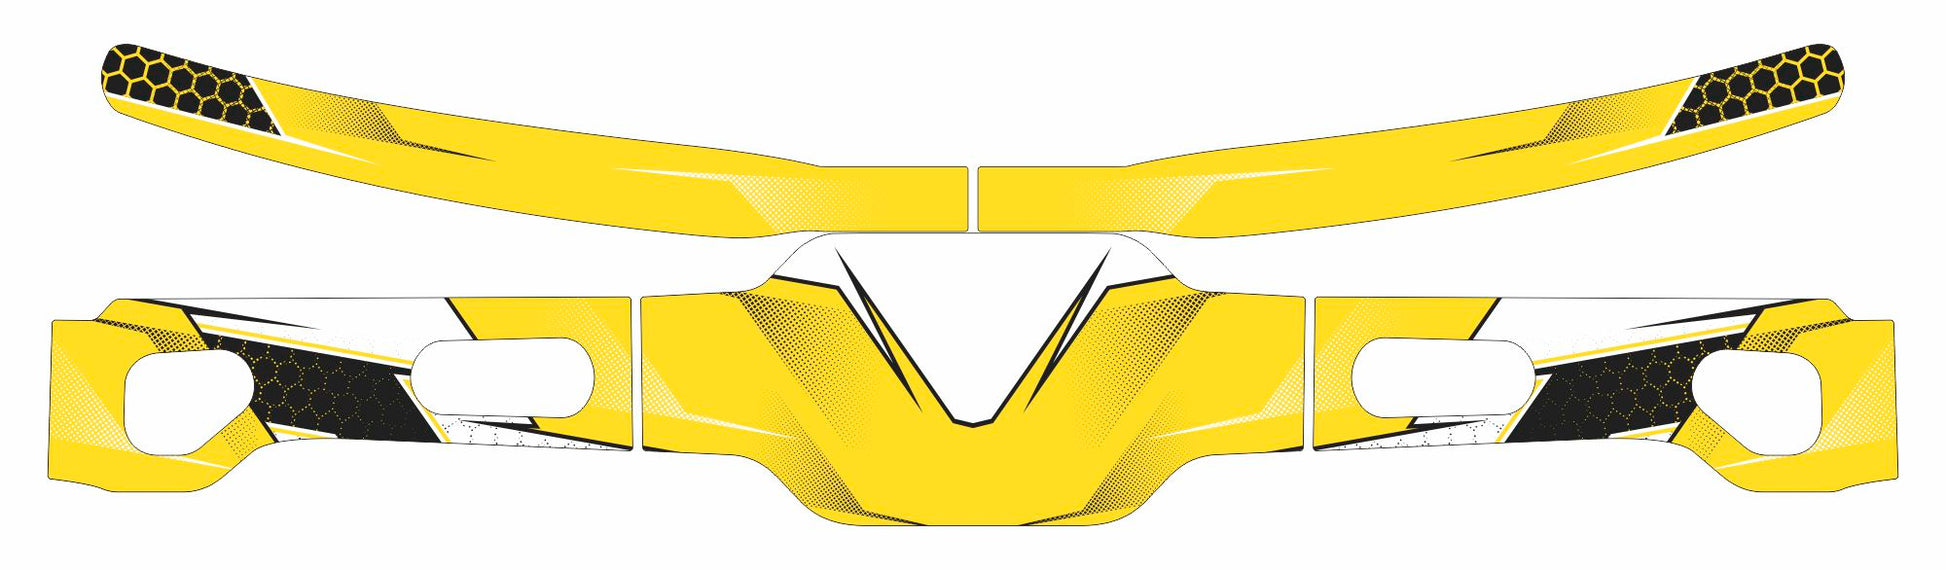 Bolt Rear Bumper Graphics Kit